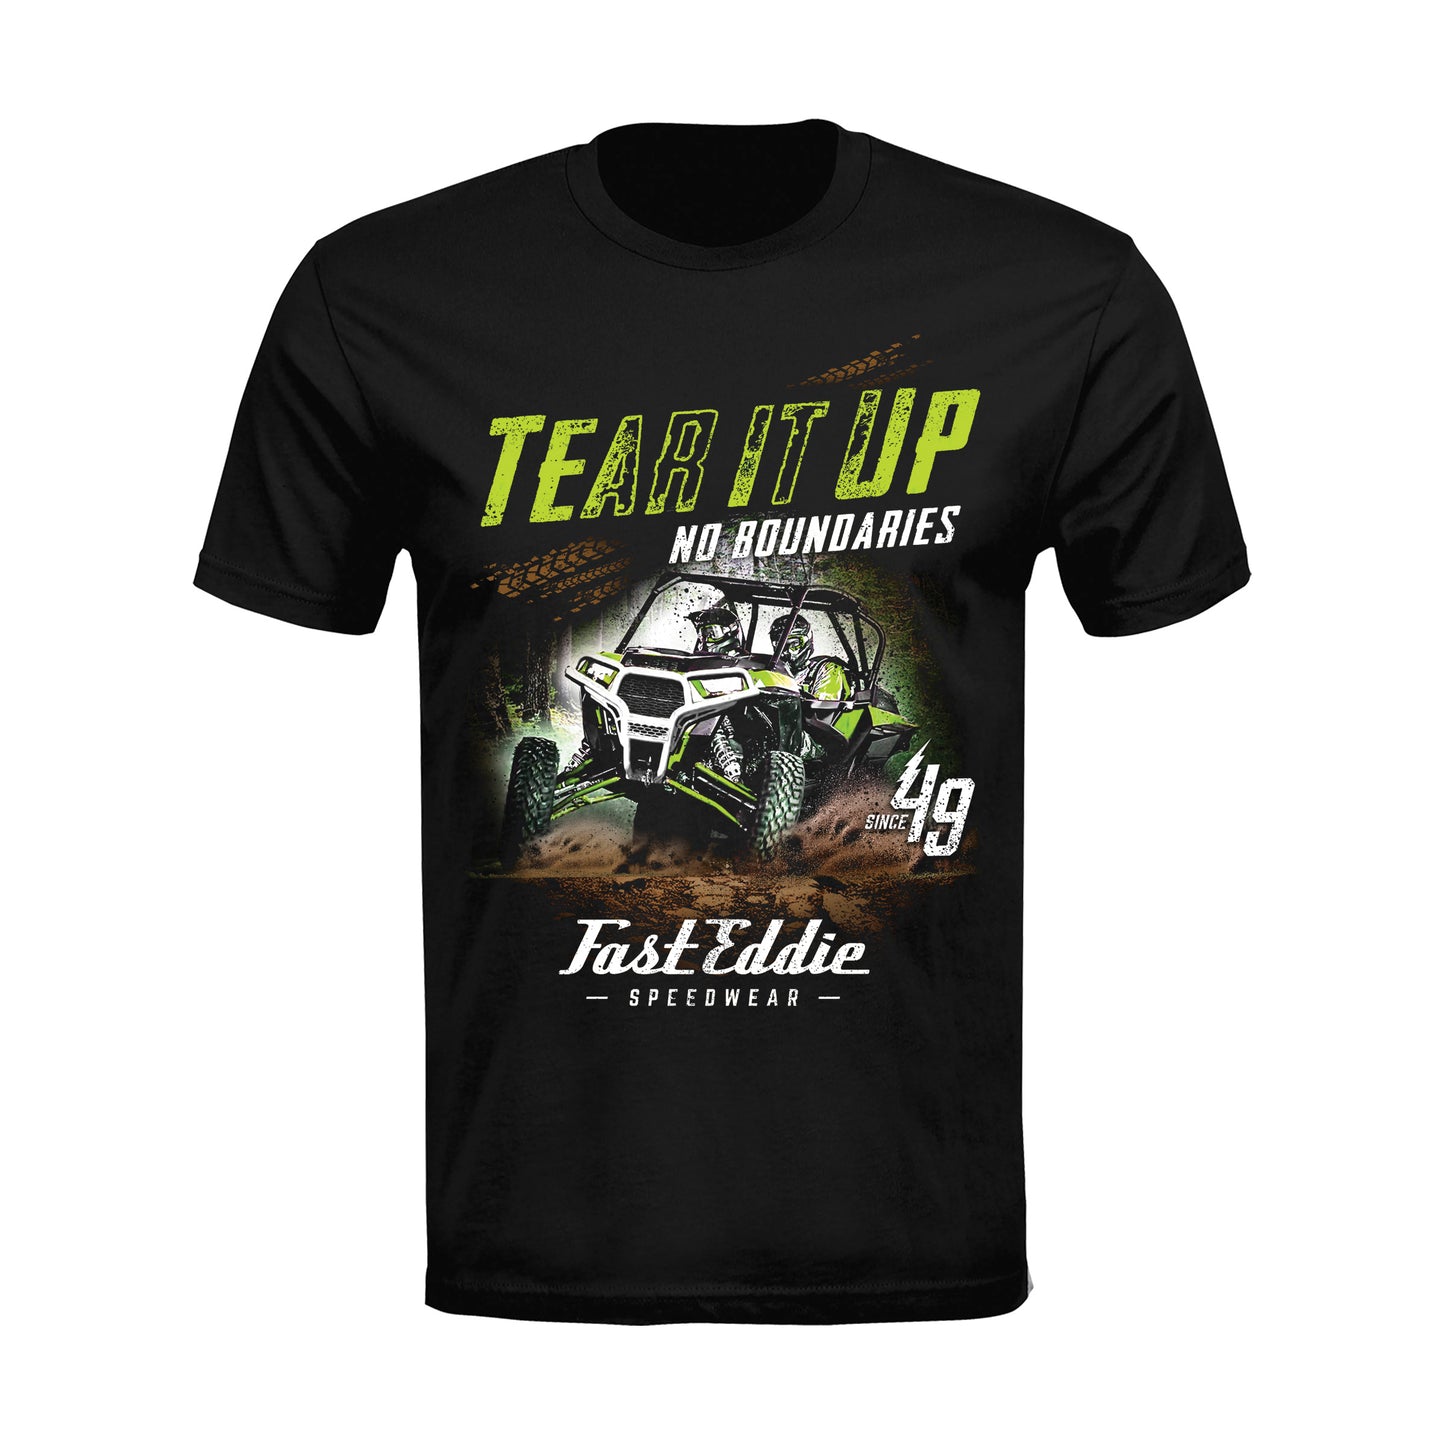 Tear it Up T-Shirt